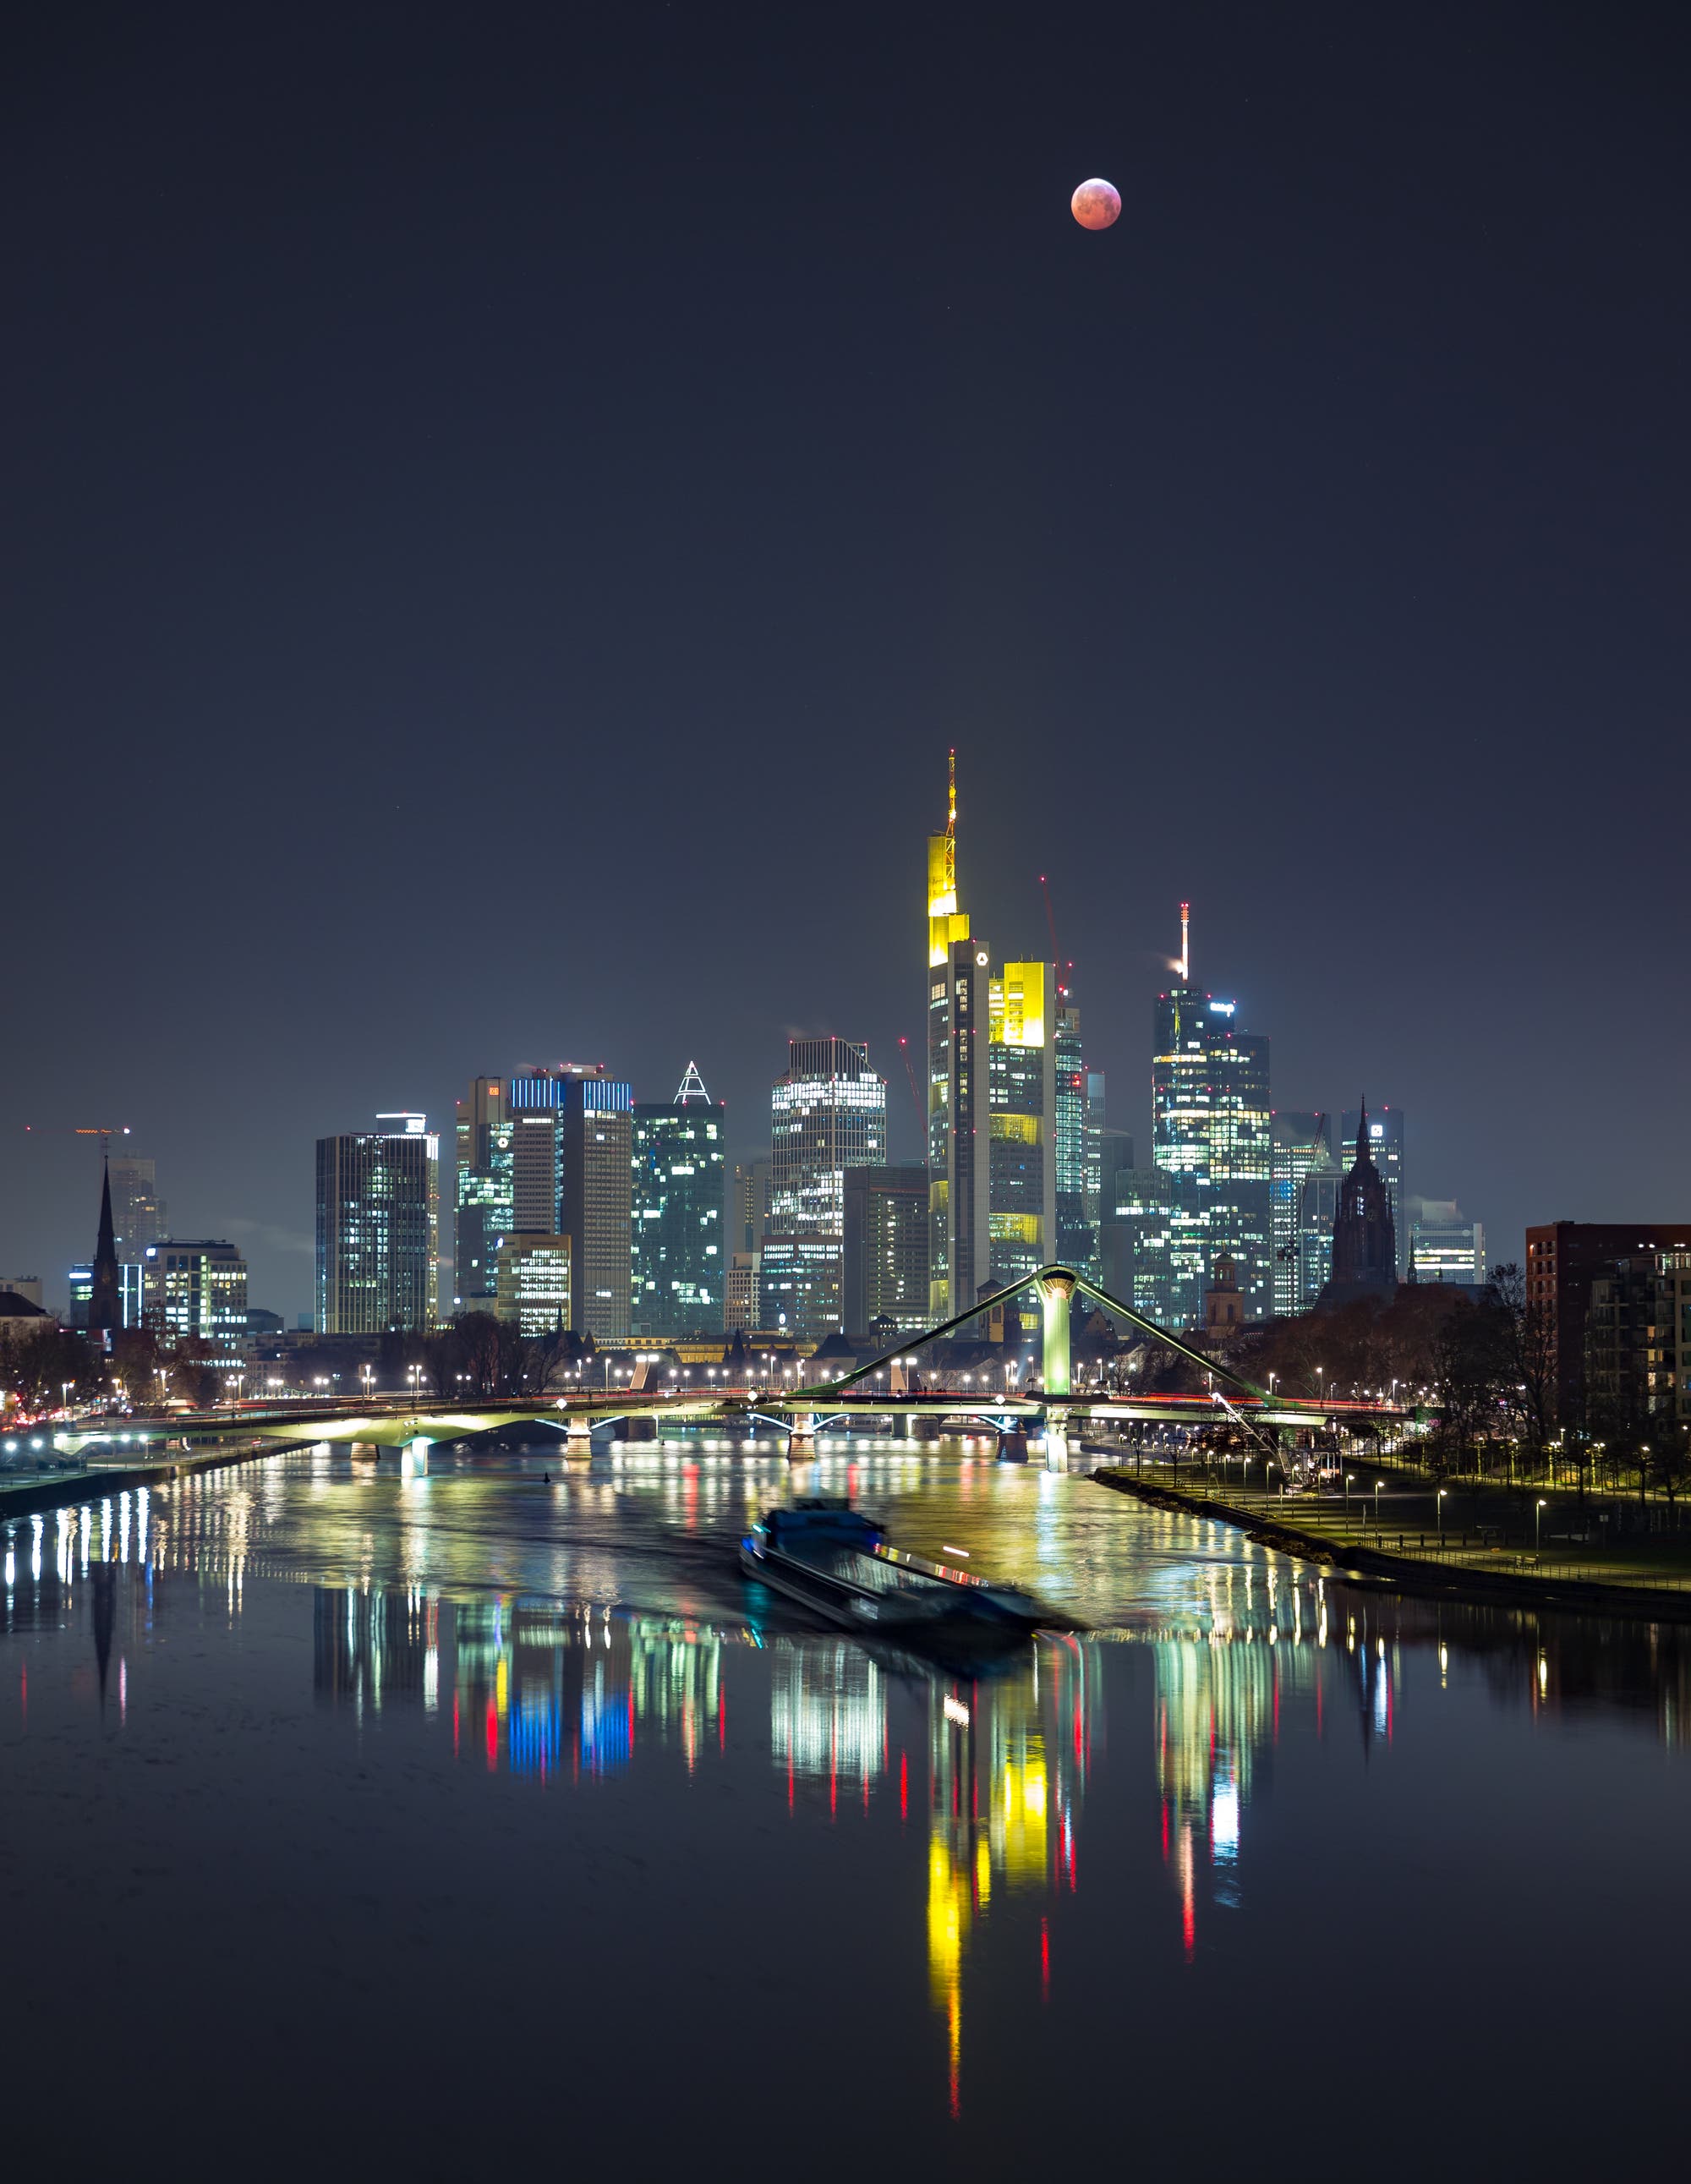 Mondfinsternis über Frankfurter Skyline